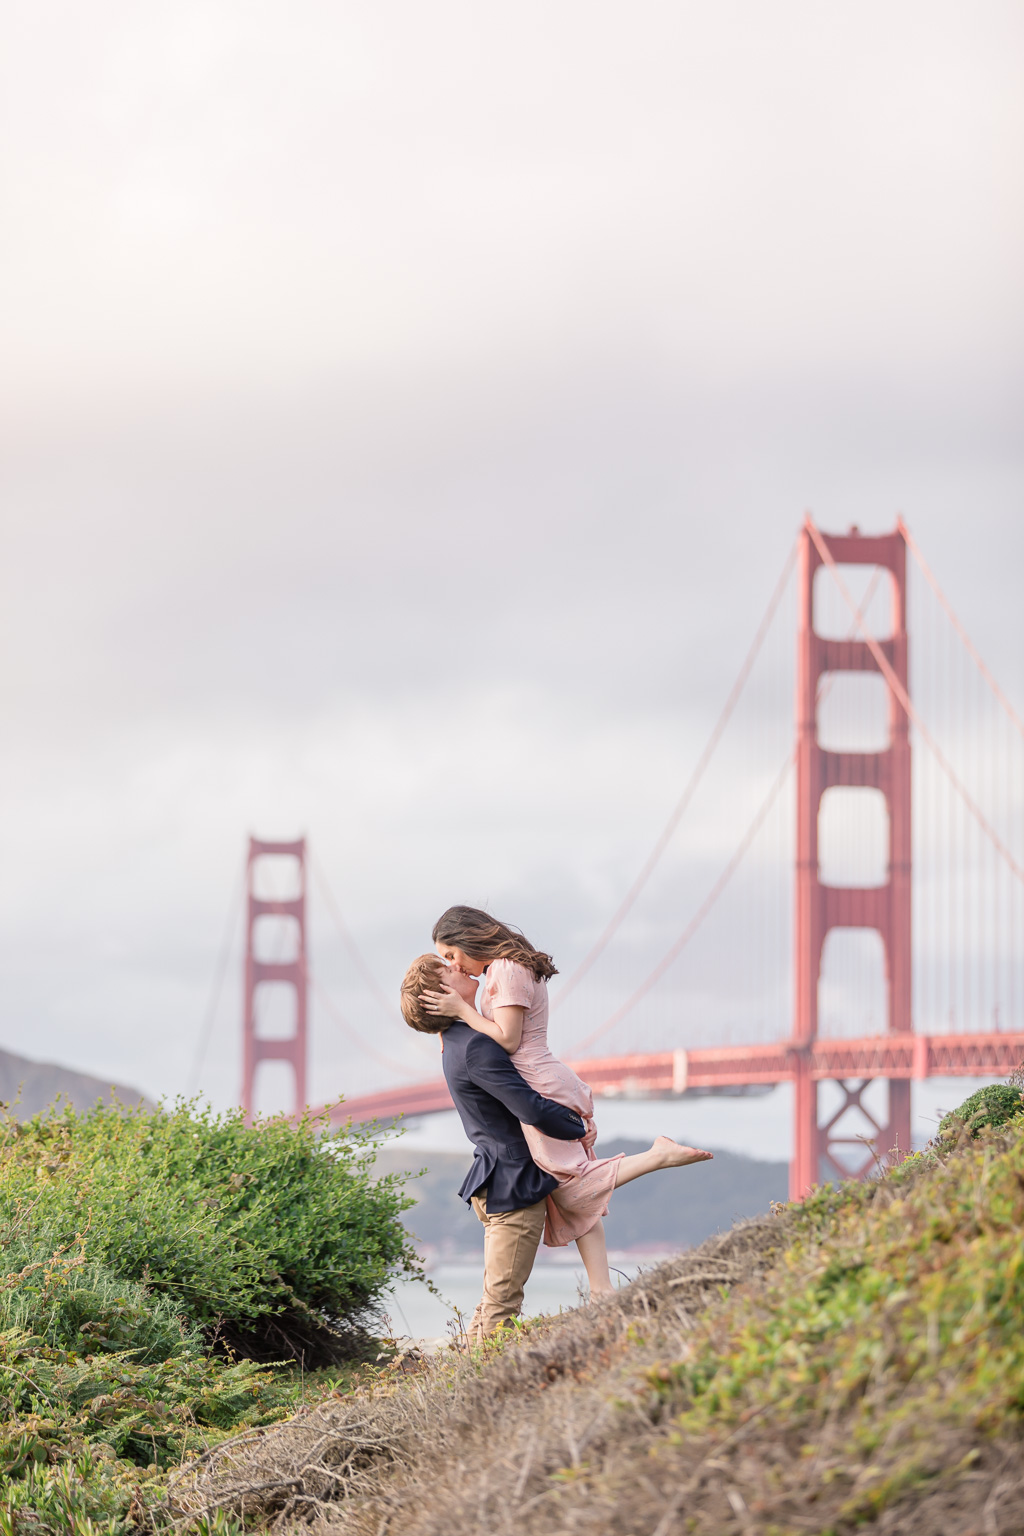 ultra romantic engagement photo by the Golden Gate Bridge